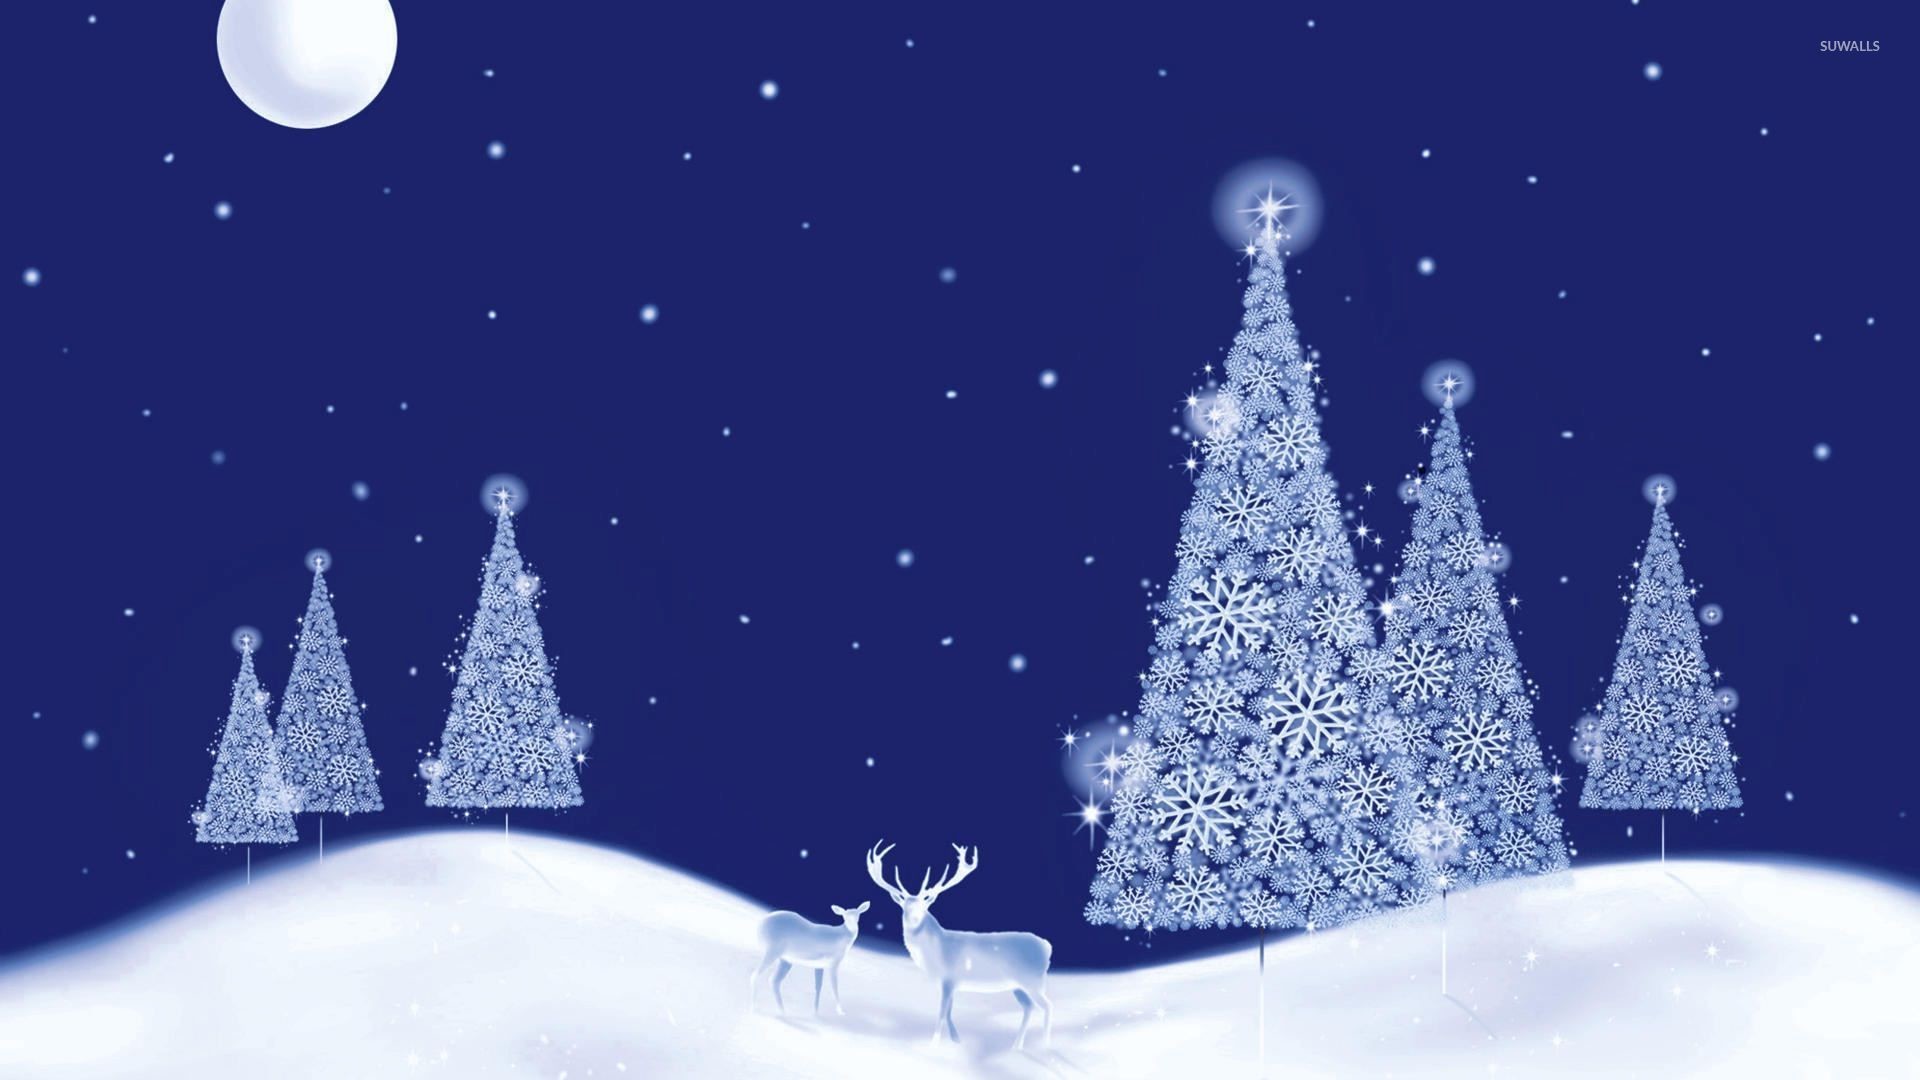 Glowing white Christmas trees on a beautiful winter night wallpaper  jpg